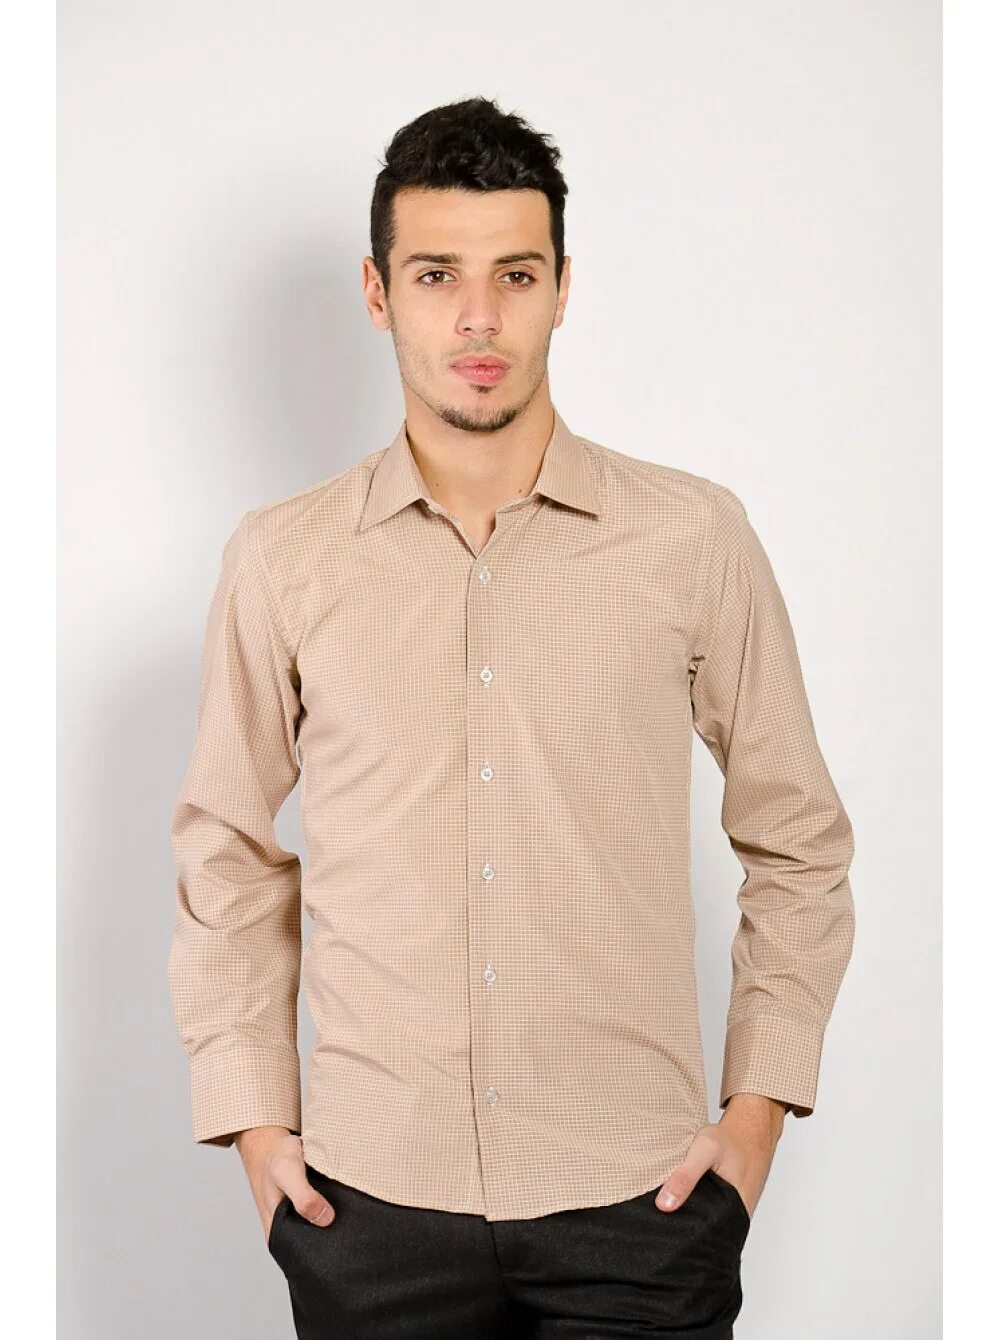 Кремовая рубашка. Рубашка MCR мужская бежевая. Рубашка Zolla цвет бежевый мужская. Tom Farr 47210 беж-коричневый рубашка мужская. Мужская рубашка бежевая.